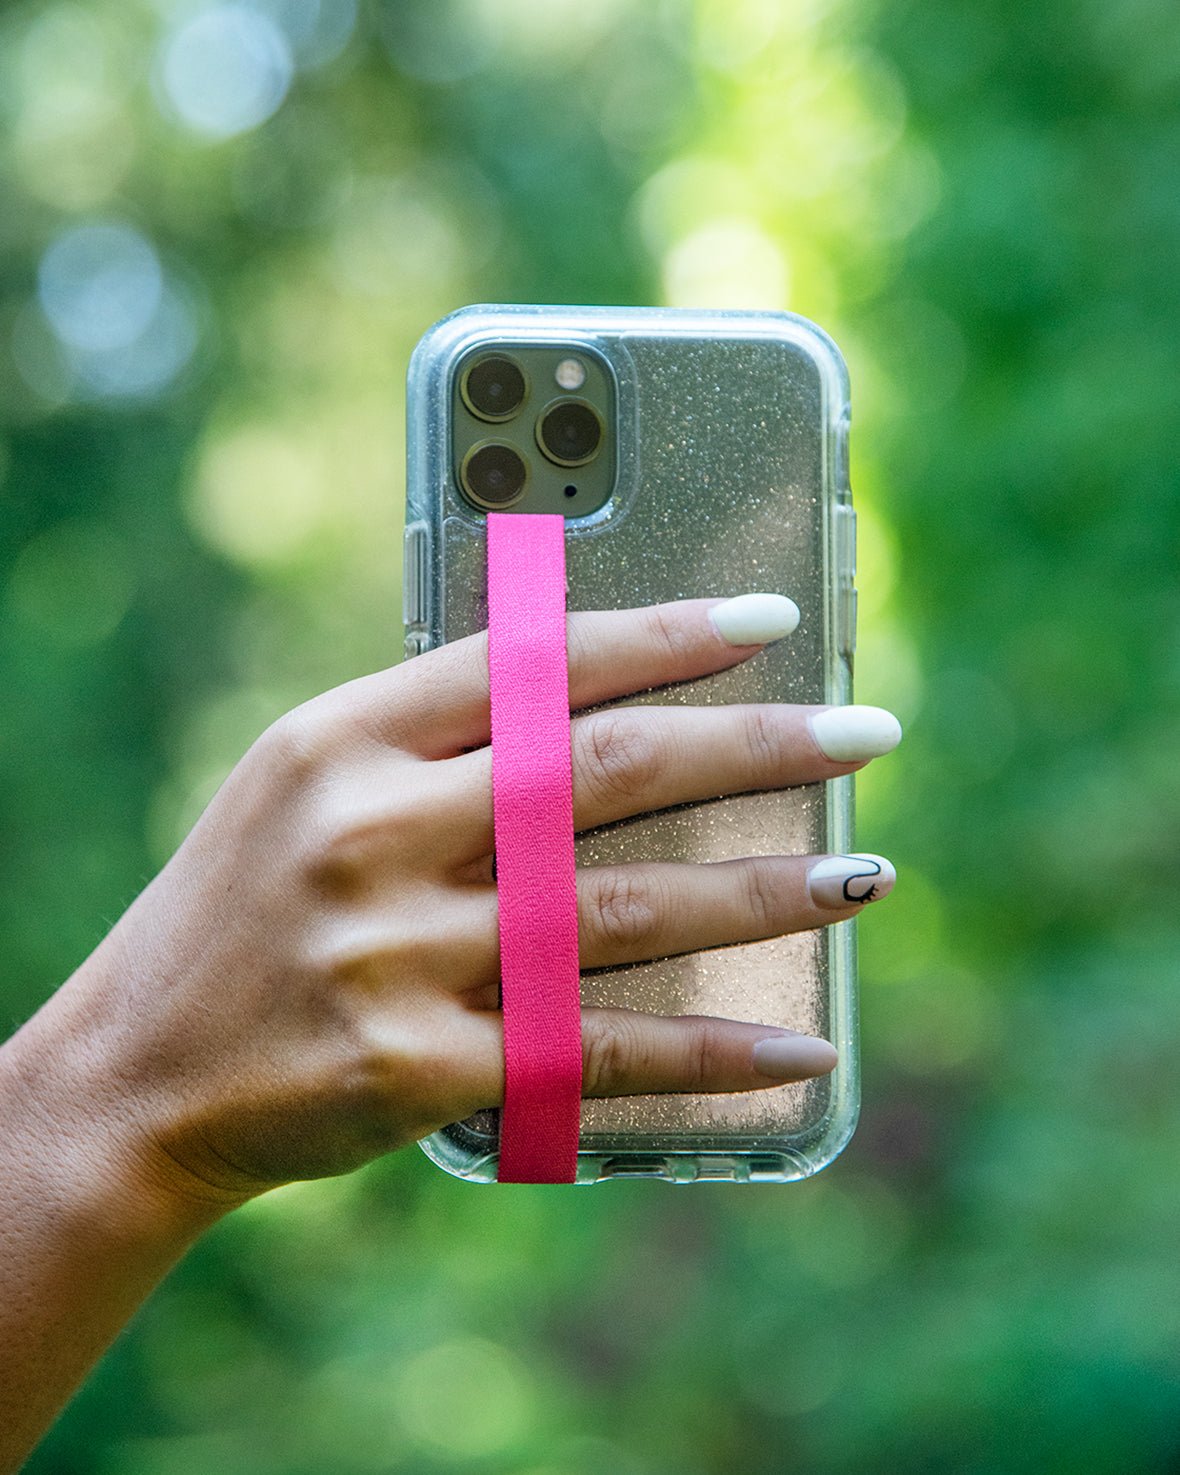 Solid pink smartphone grip